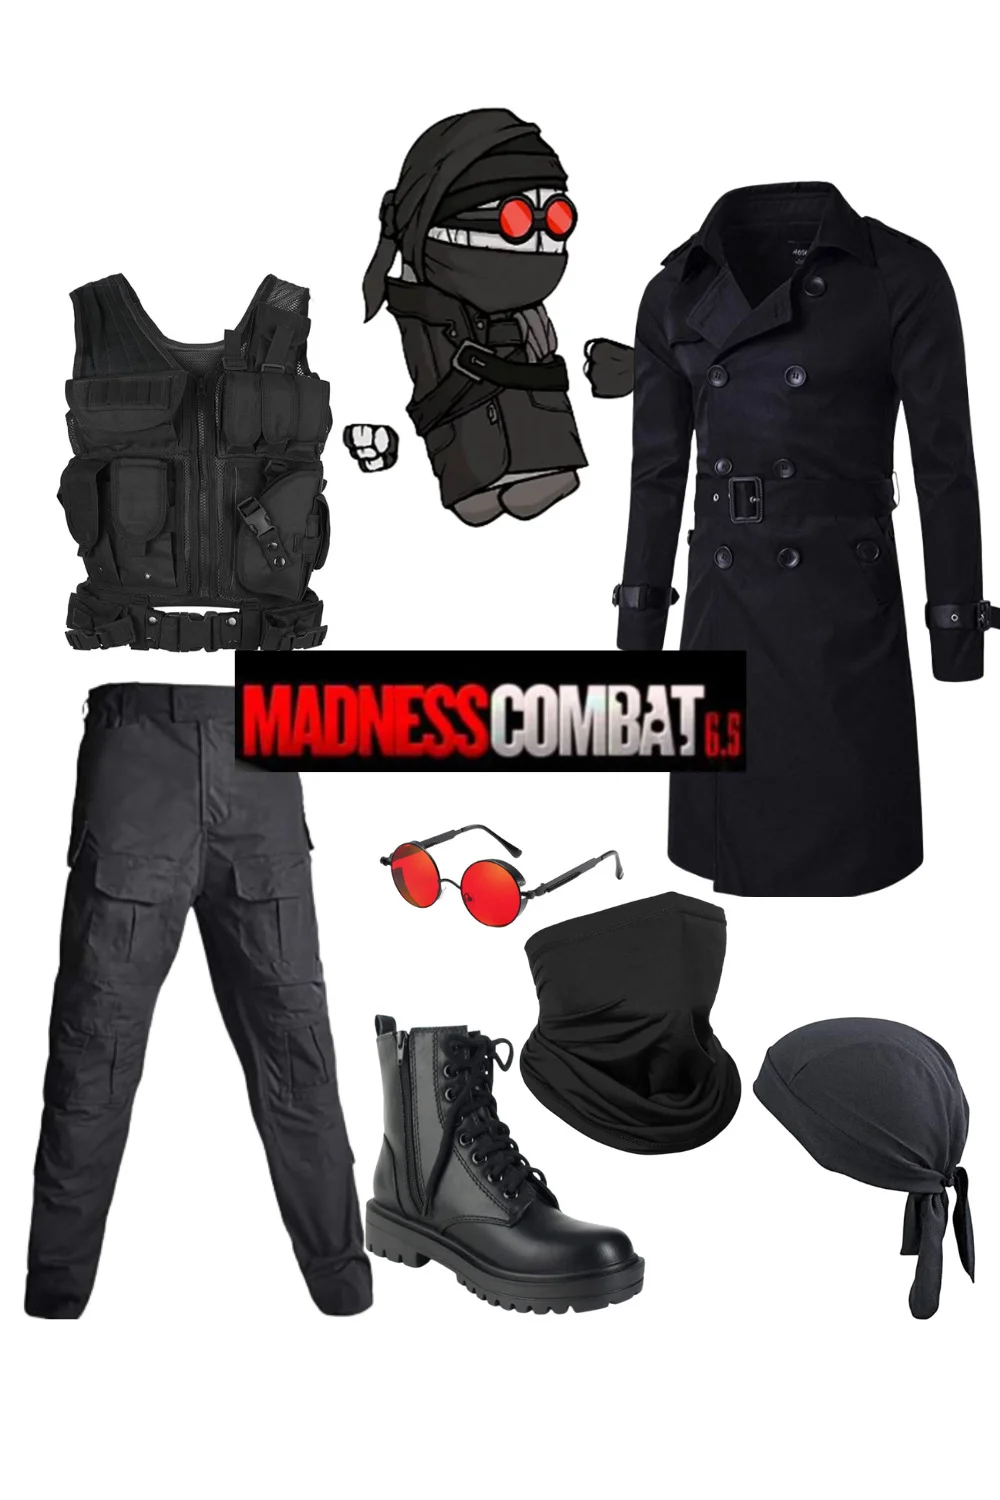 Madness combat hank cosplay